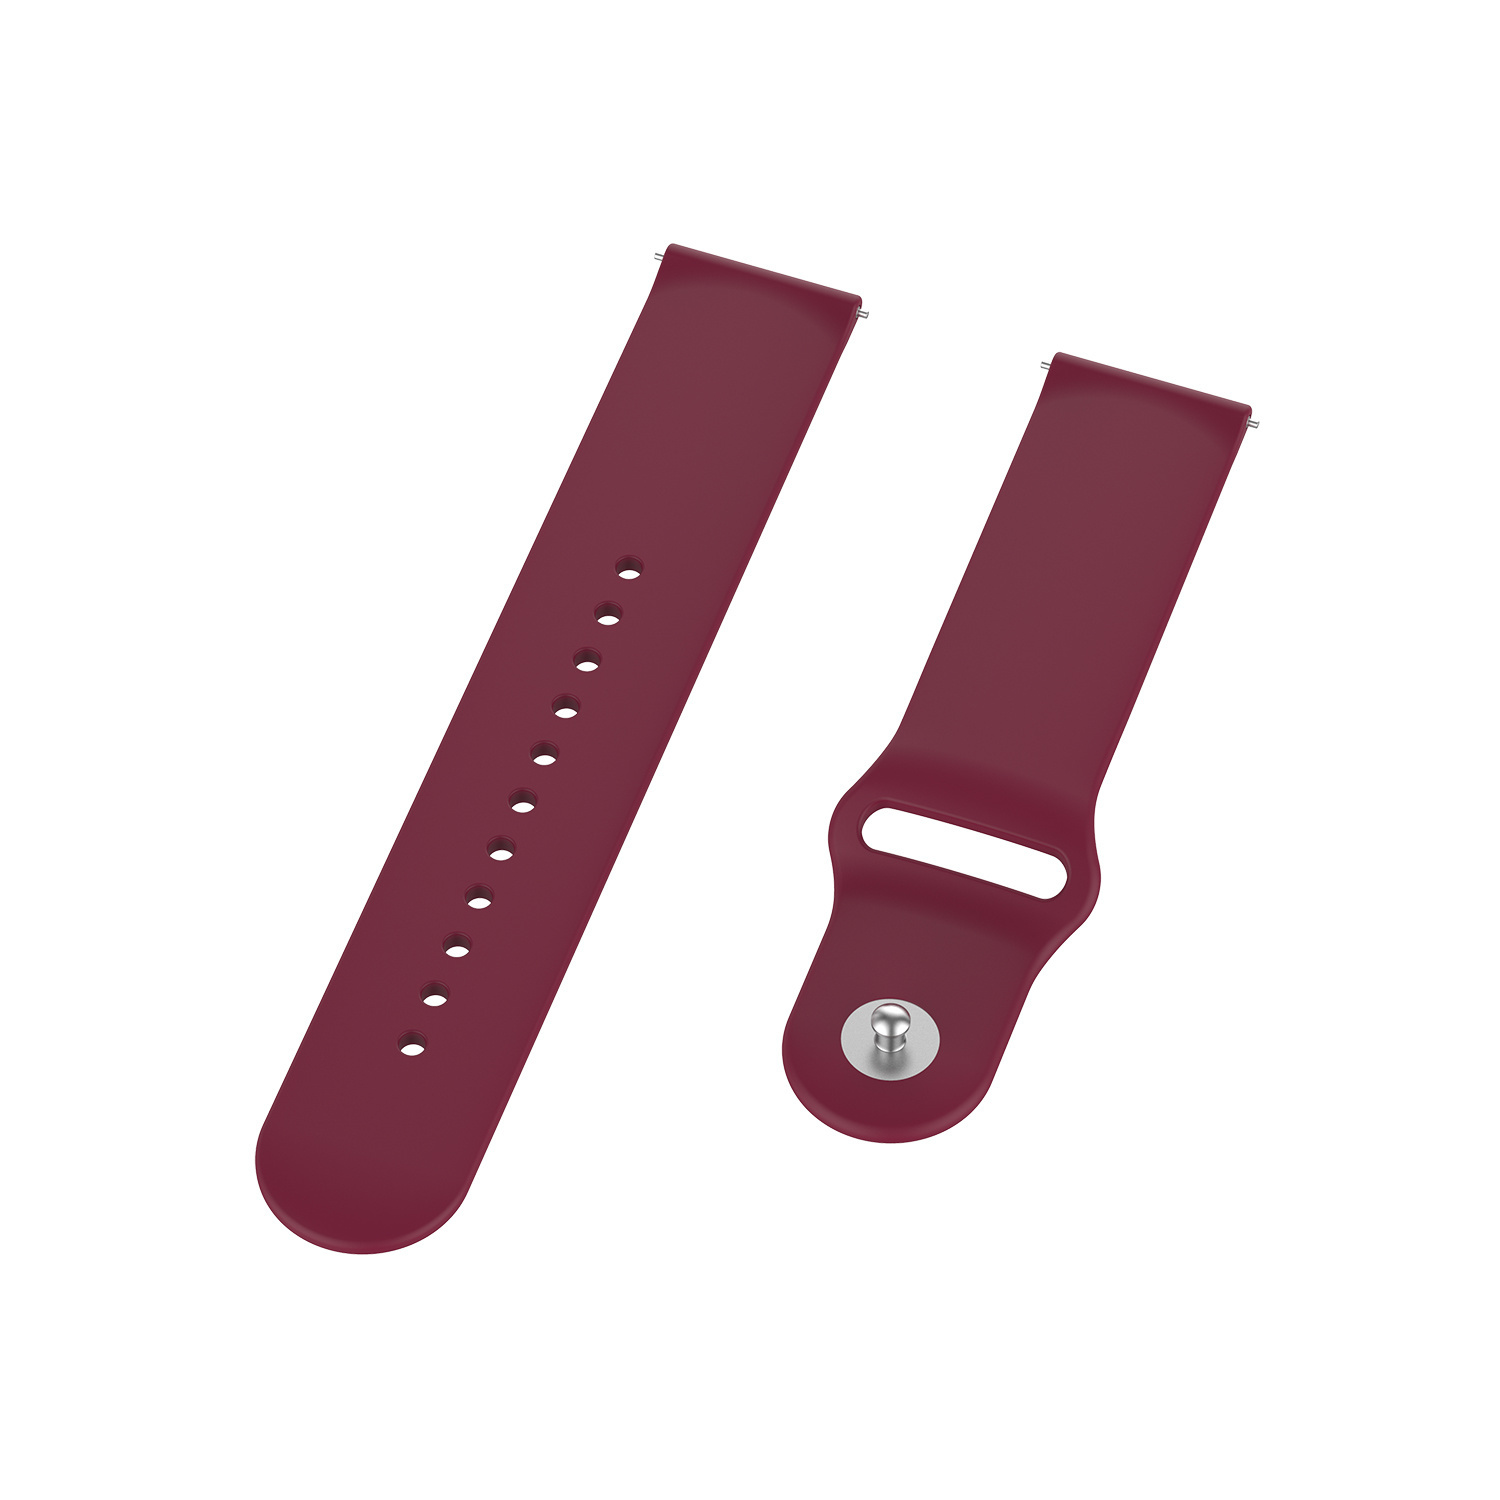 Bracelet sport en silicone Samsung Galaxy Watch - rouge vin